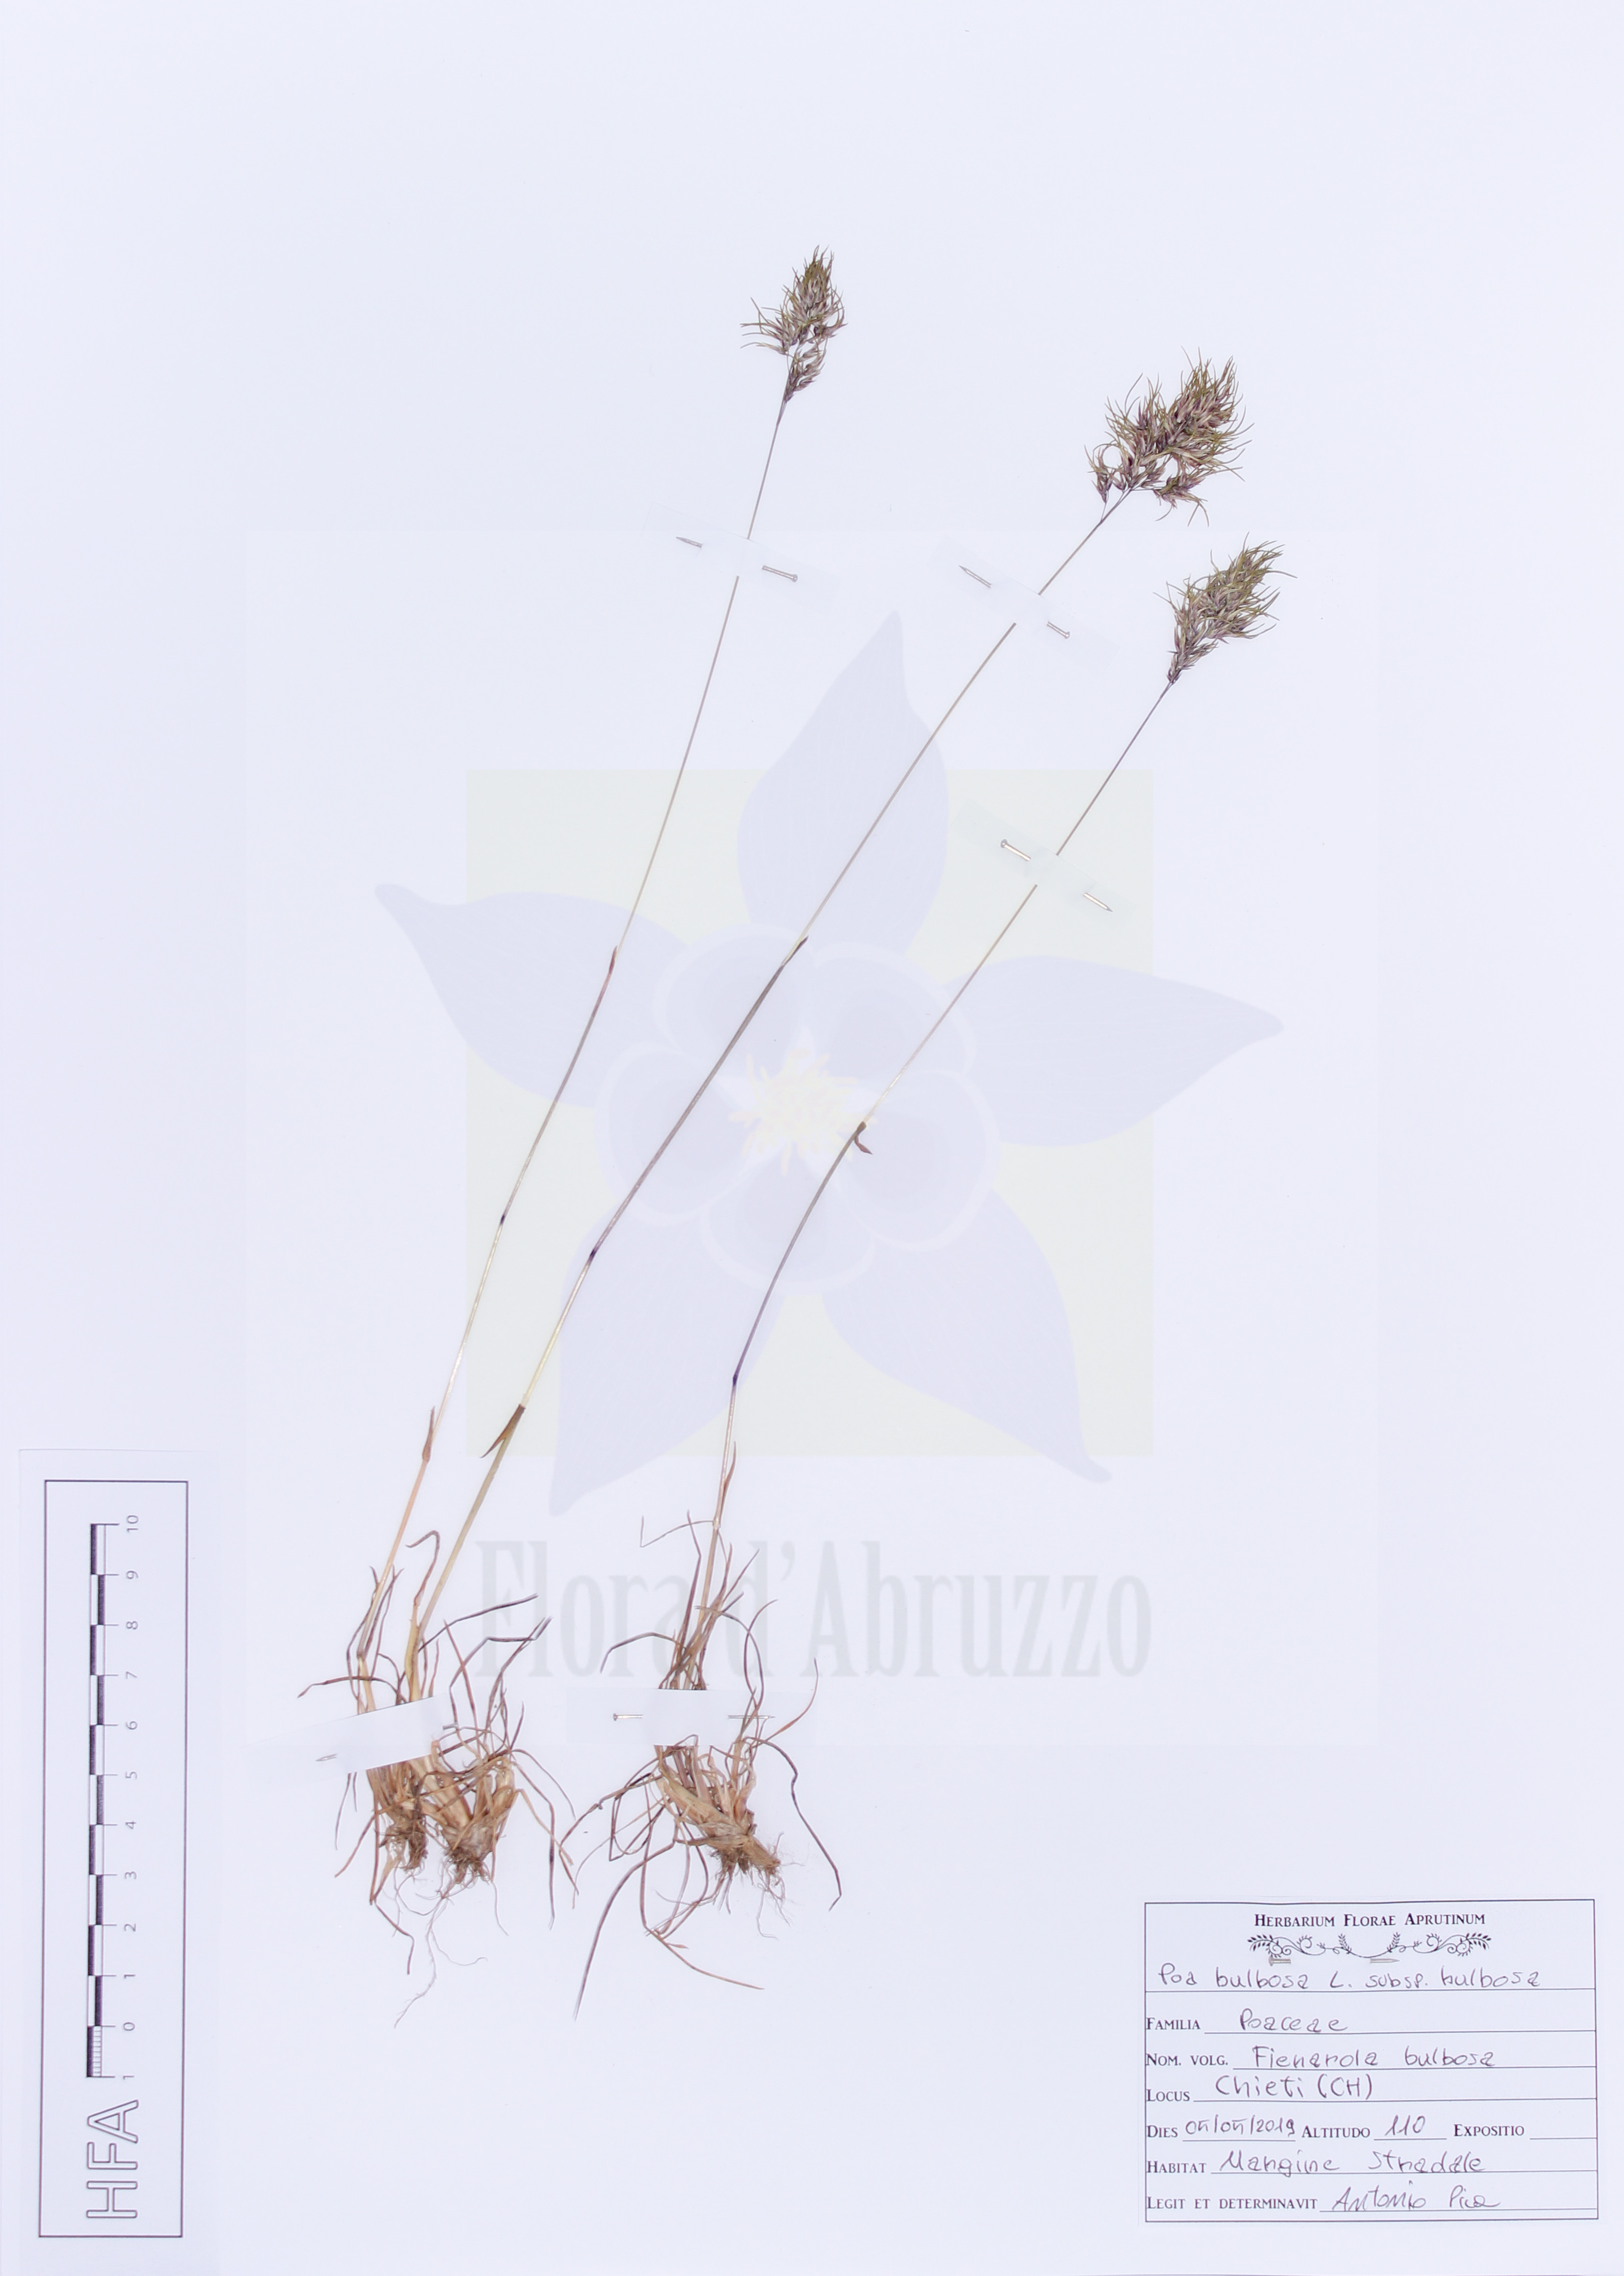 Poa bulbosa L. subsp. bulbosa